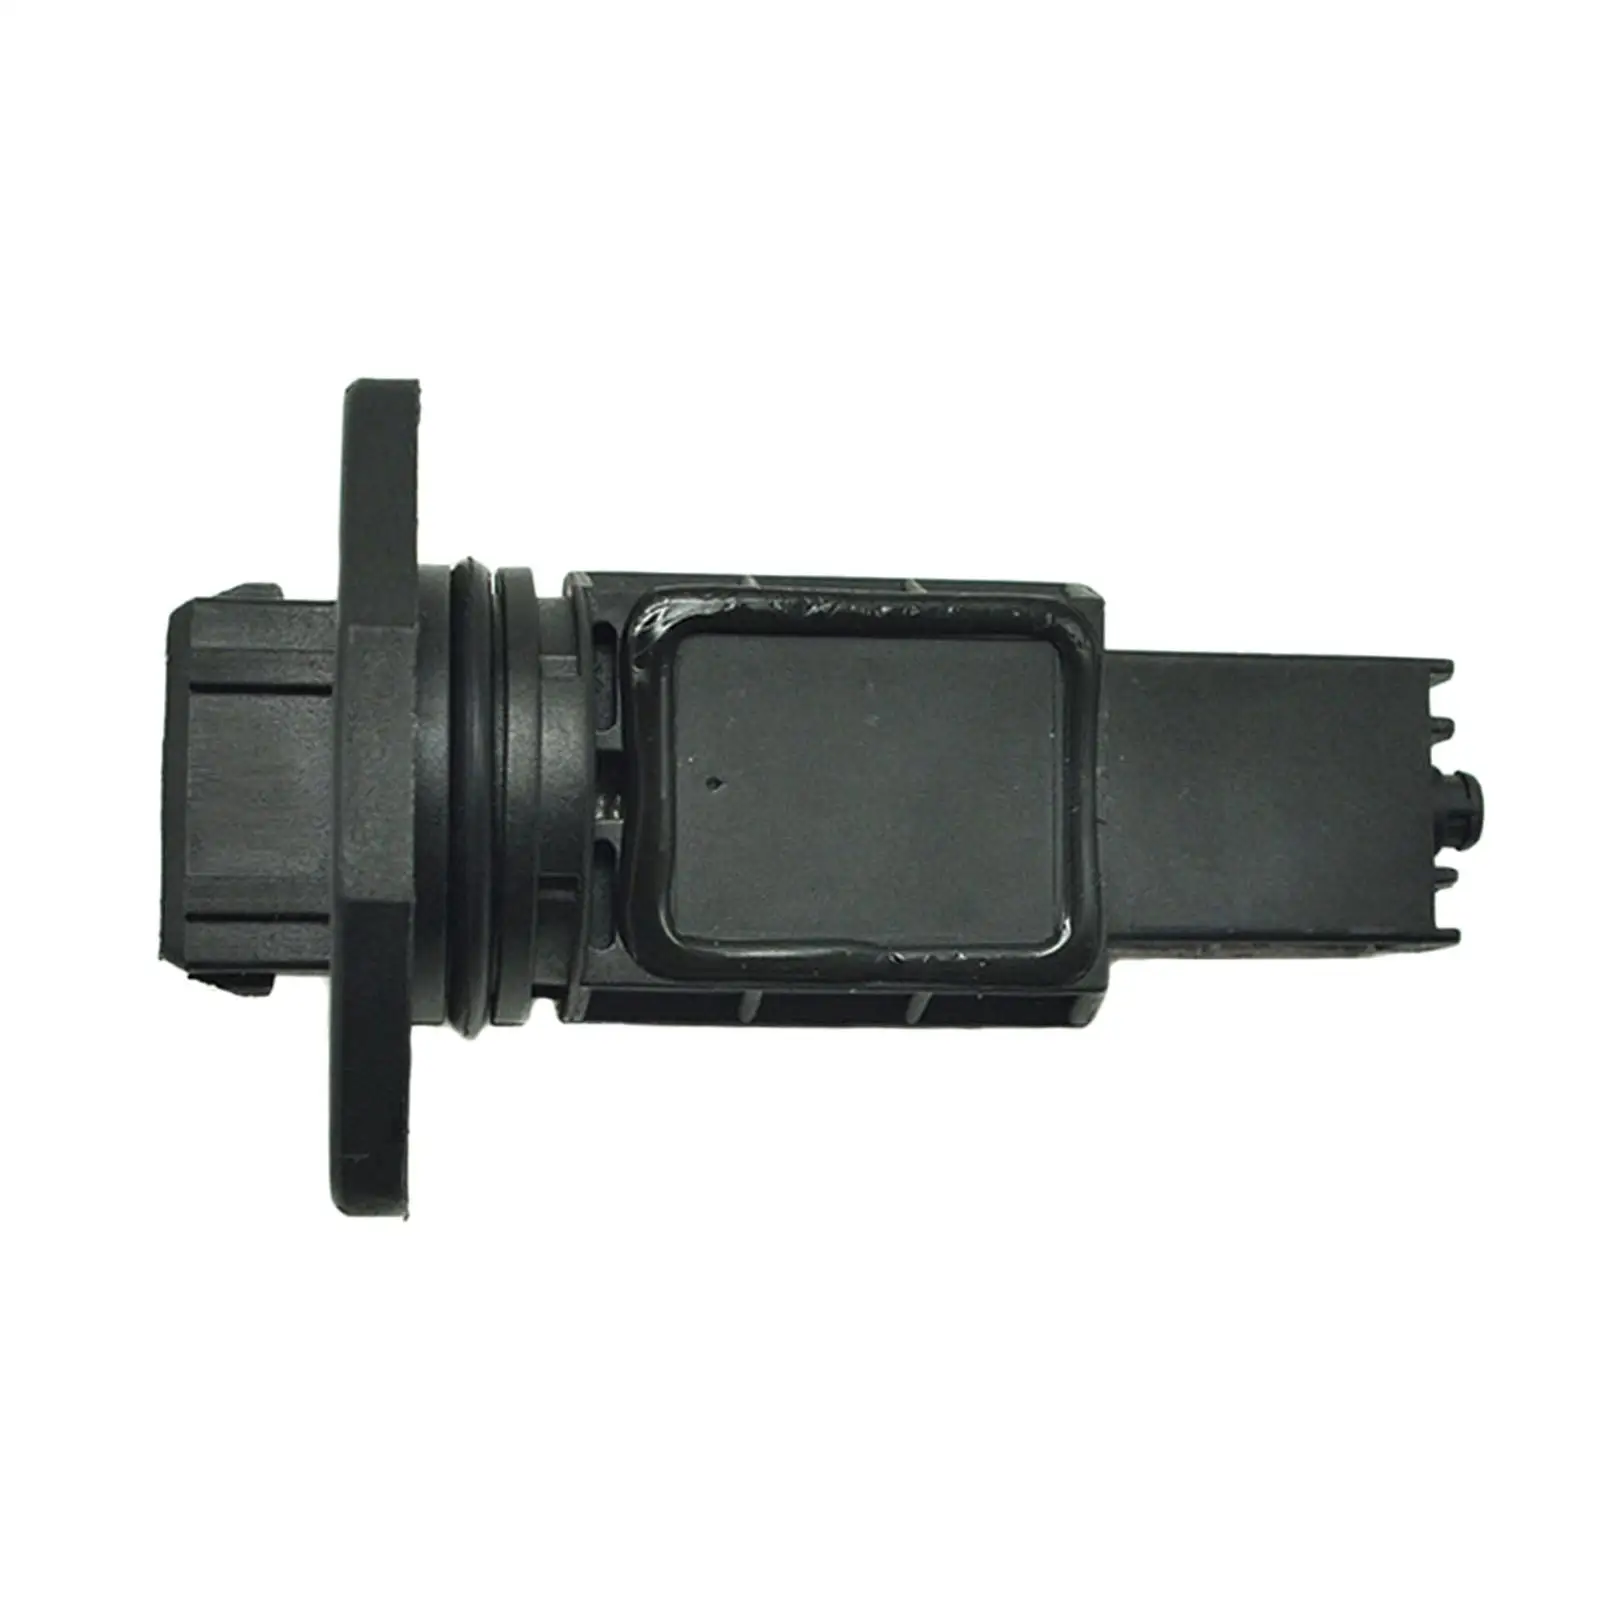 Mass Air Flow Sensor Replacement Plastic Auto Parts Accessories Black Maf Meter Sensor, Fit for Audi A8 0280217804, 077133471D